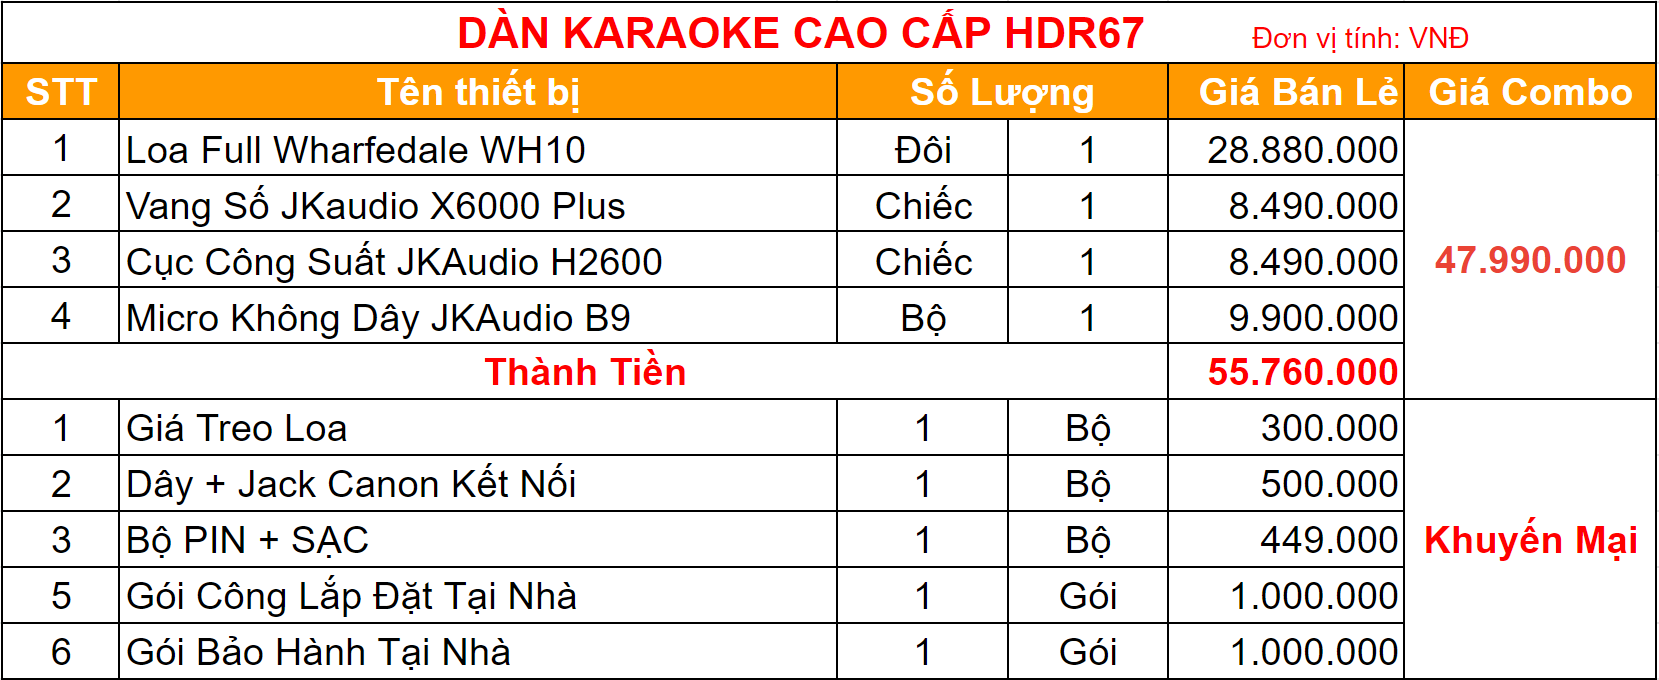 Dàn Karaoke Cao Cấp HDR67